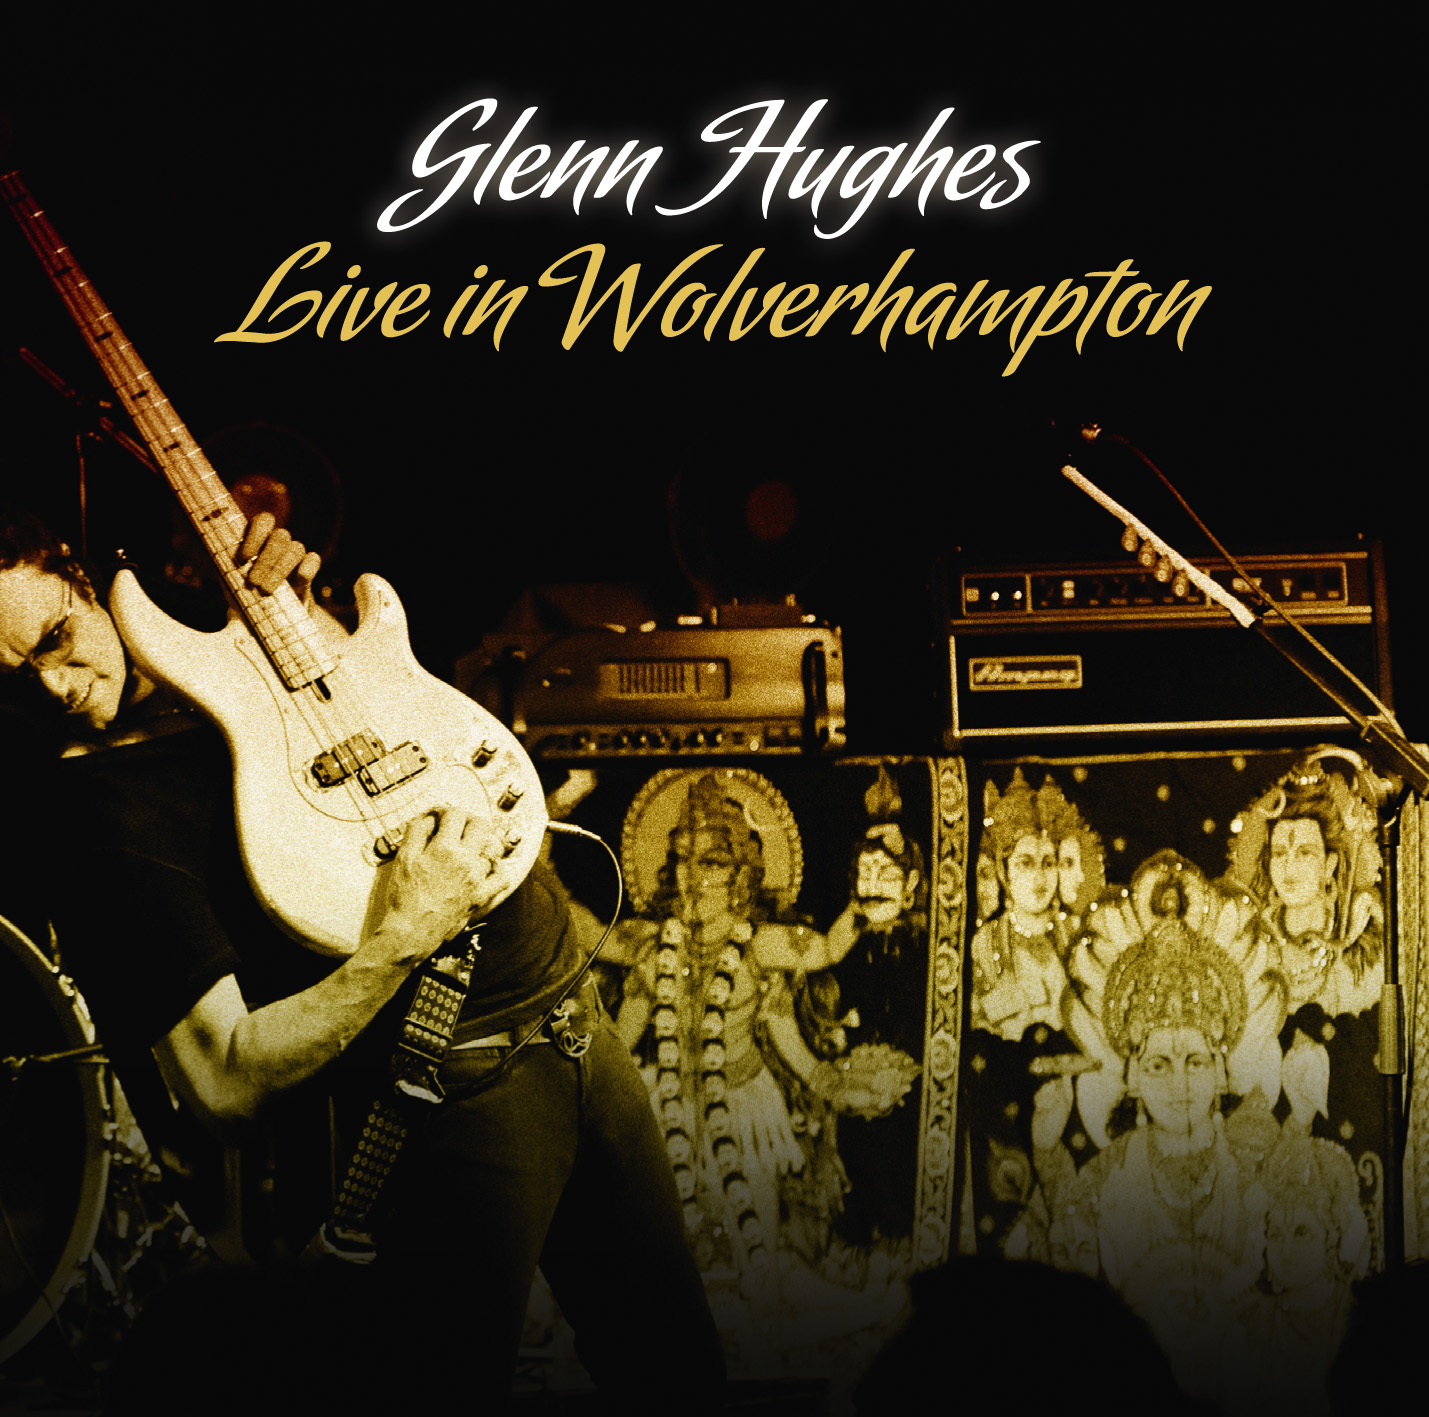 Glenn Hughes - Live in Wolverhampton - 2xCD